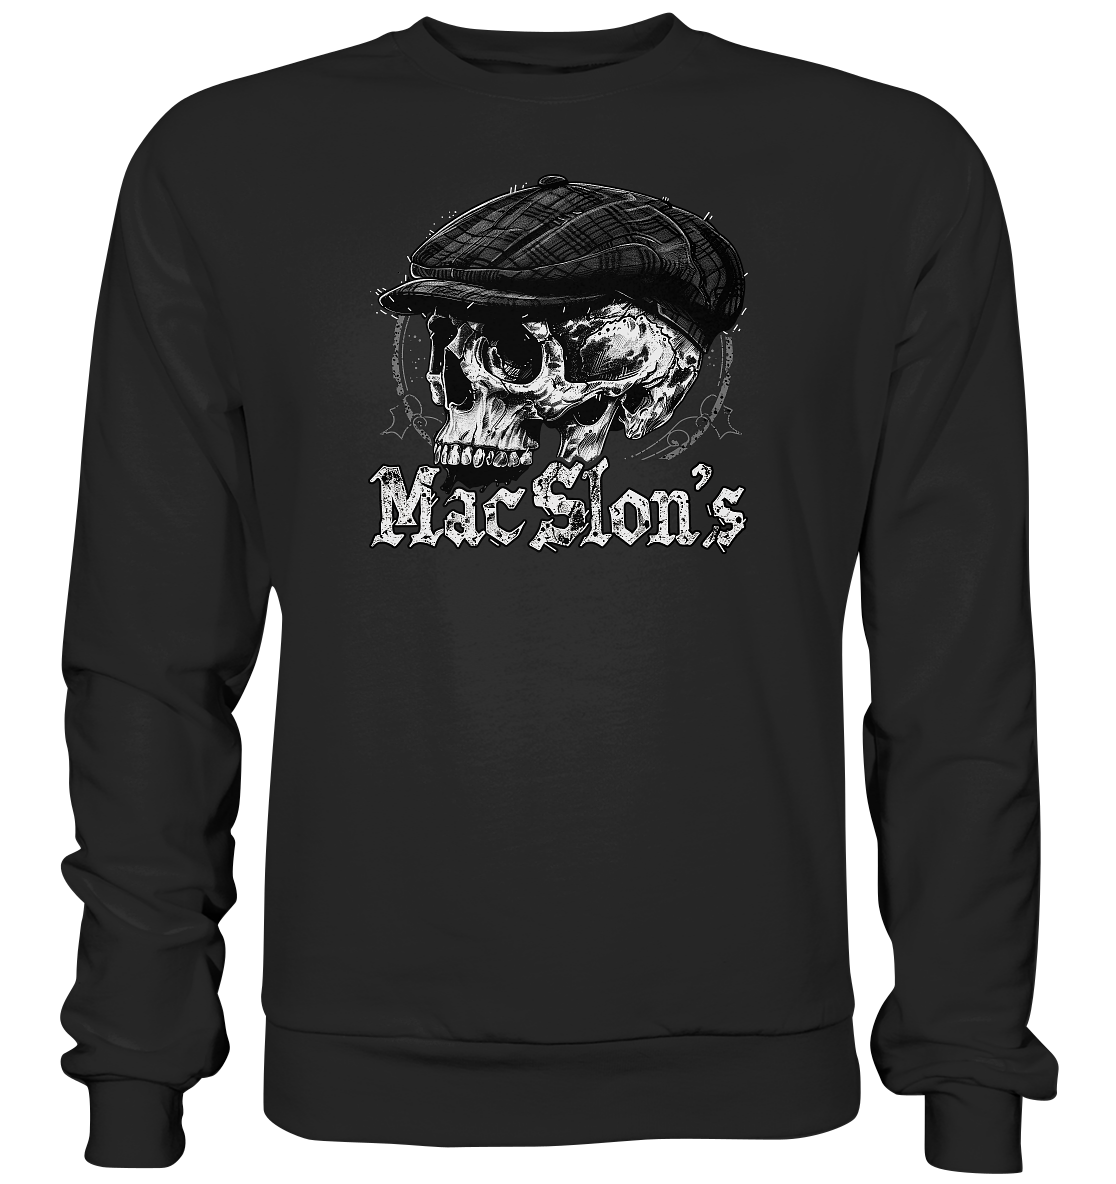 MacSlon's "Flatcap-Skull II" - Premium Sweatshirt